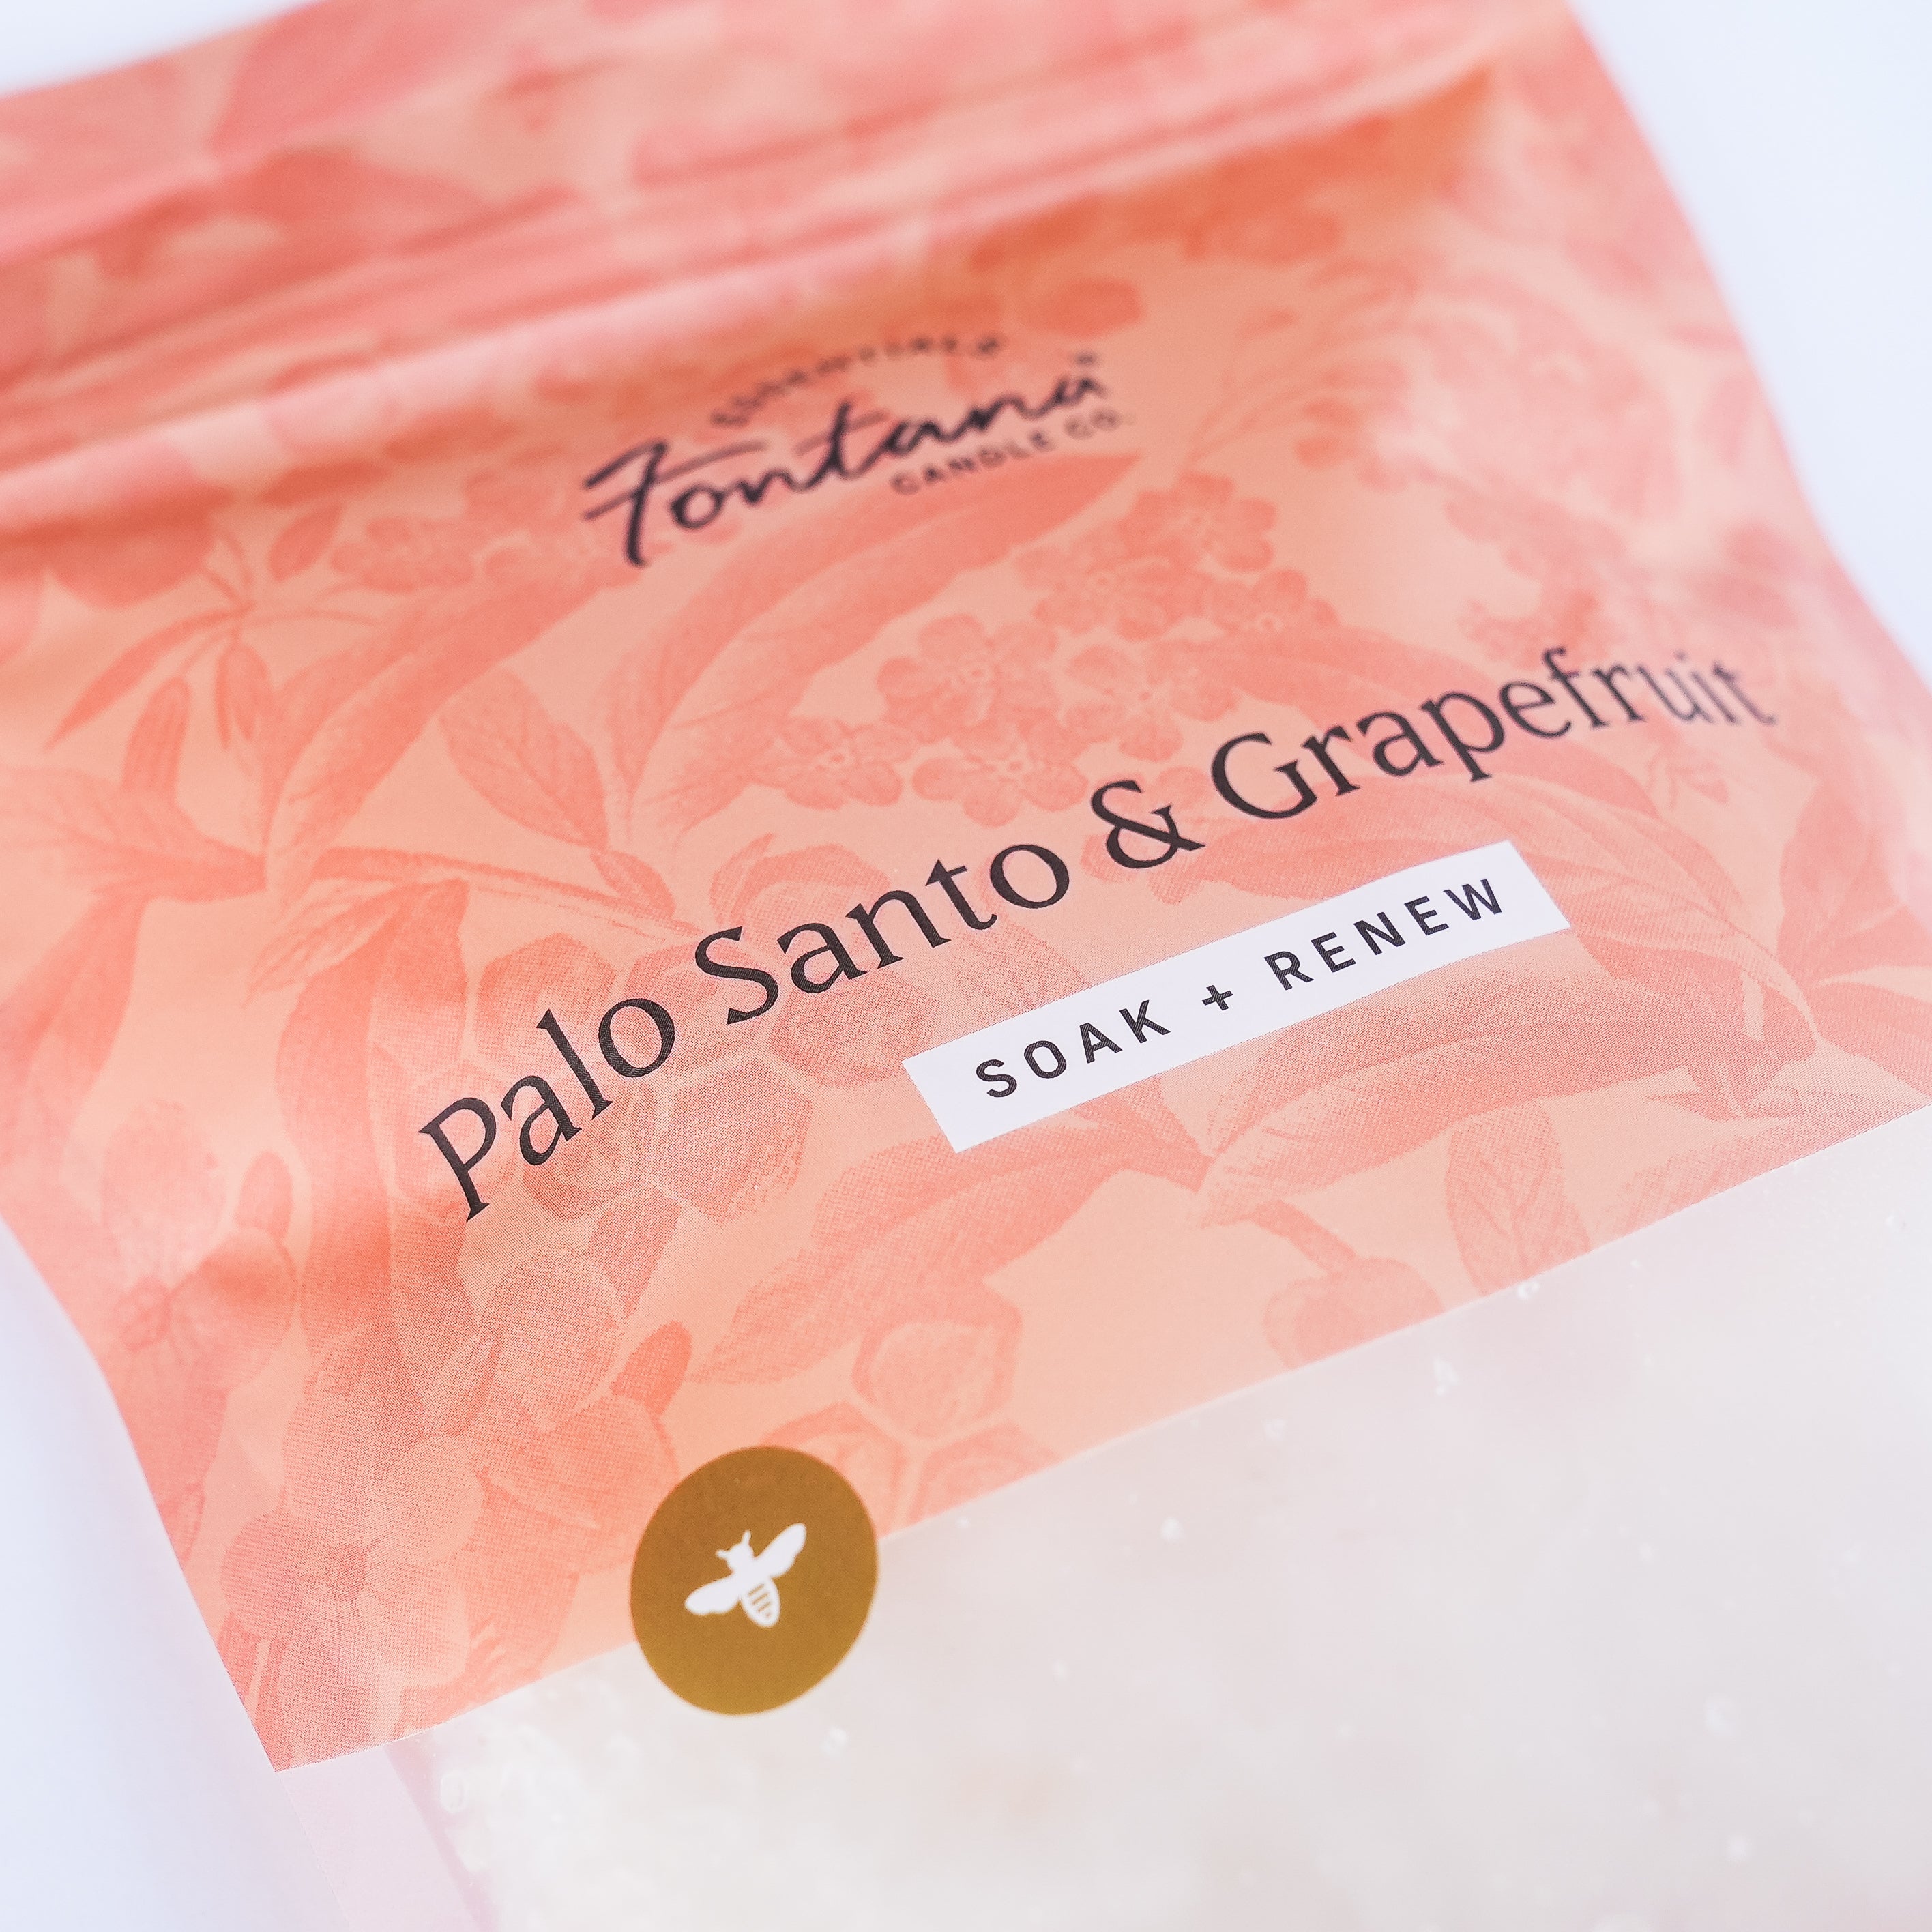 Palo Santo Grapefruit Essential Oil Bath Salt